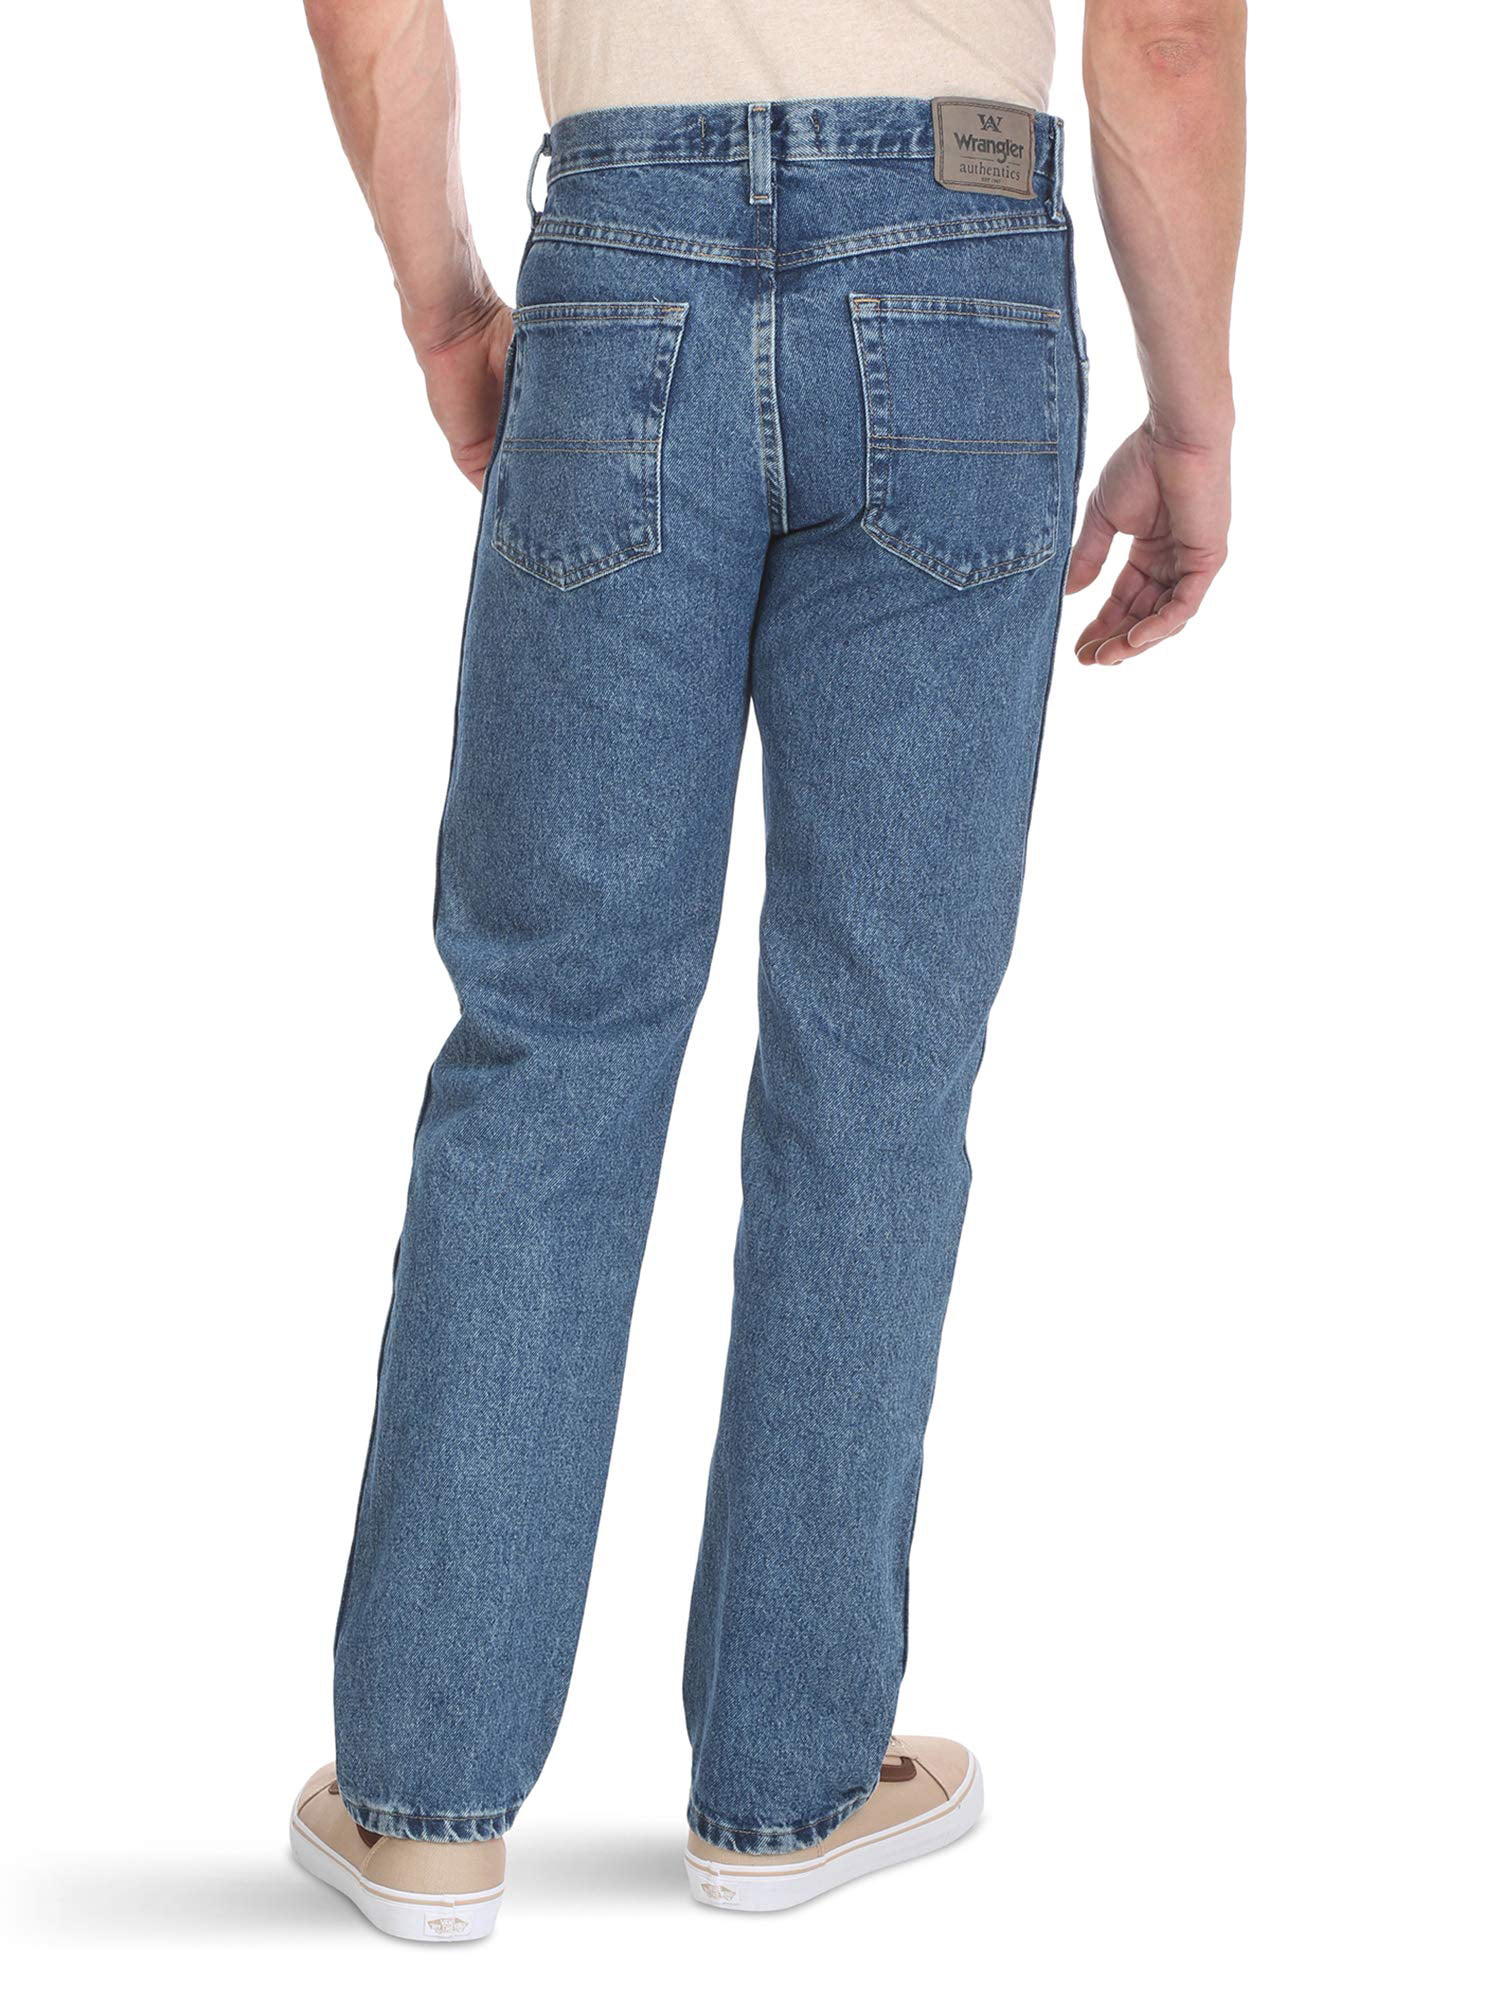 walmart wrangler flex fit jeans